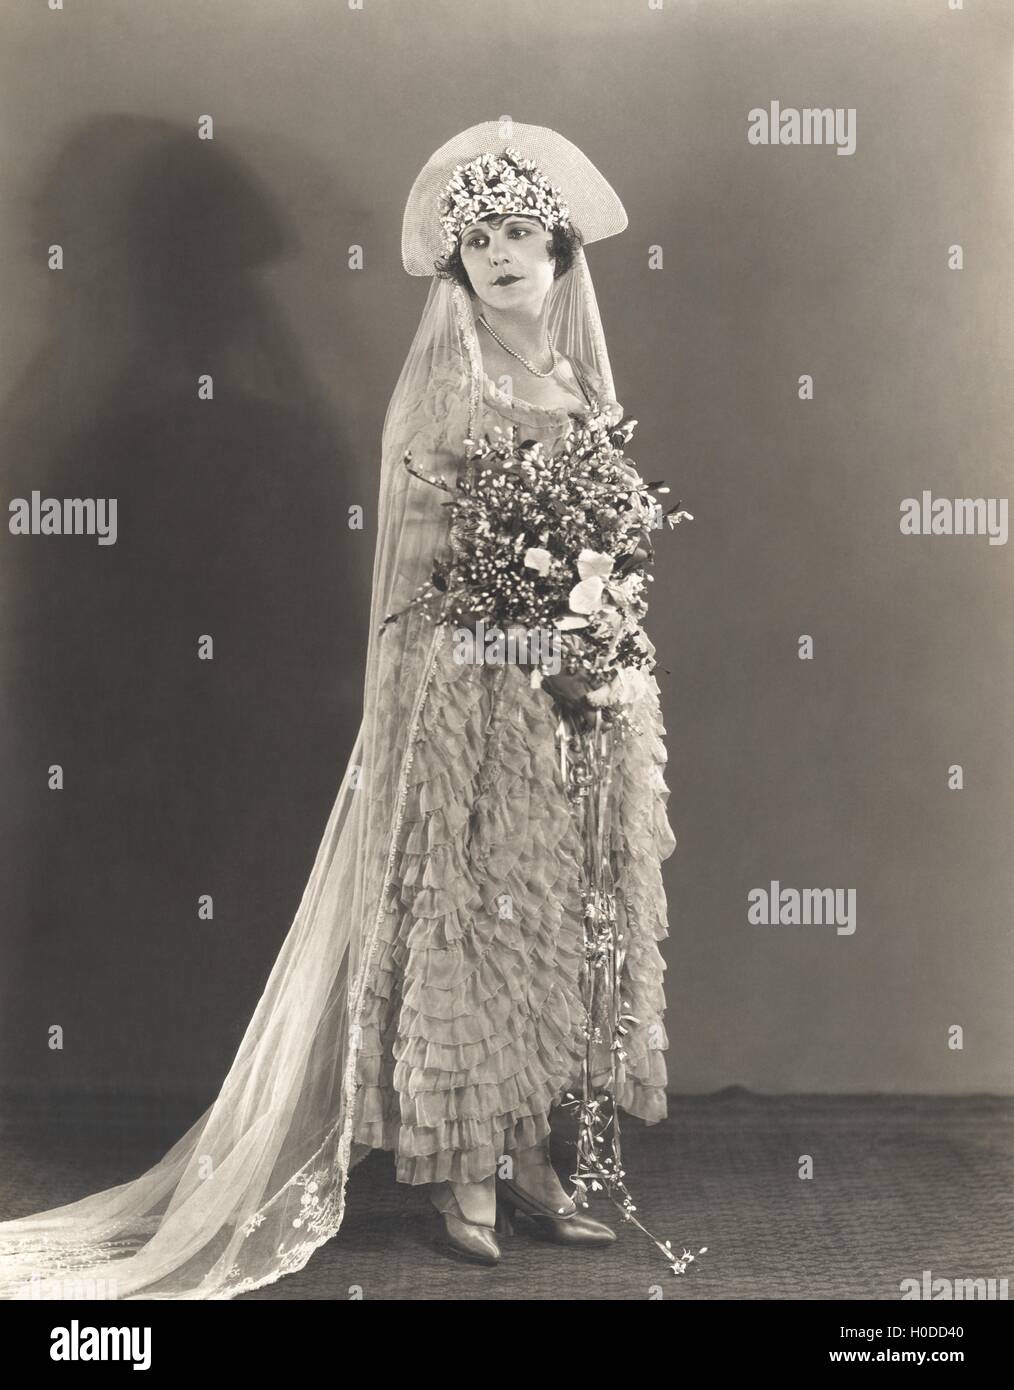 Bride wearing ruffled wedding gown and flowered headdress Stock Photo